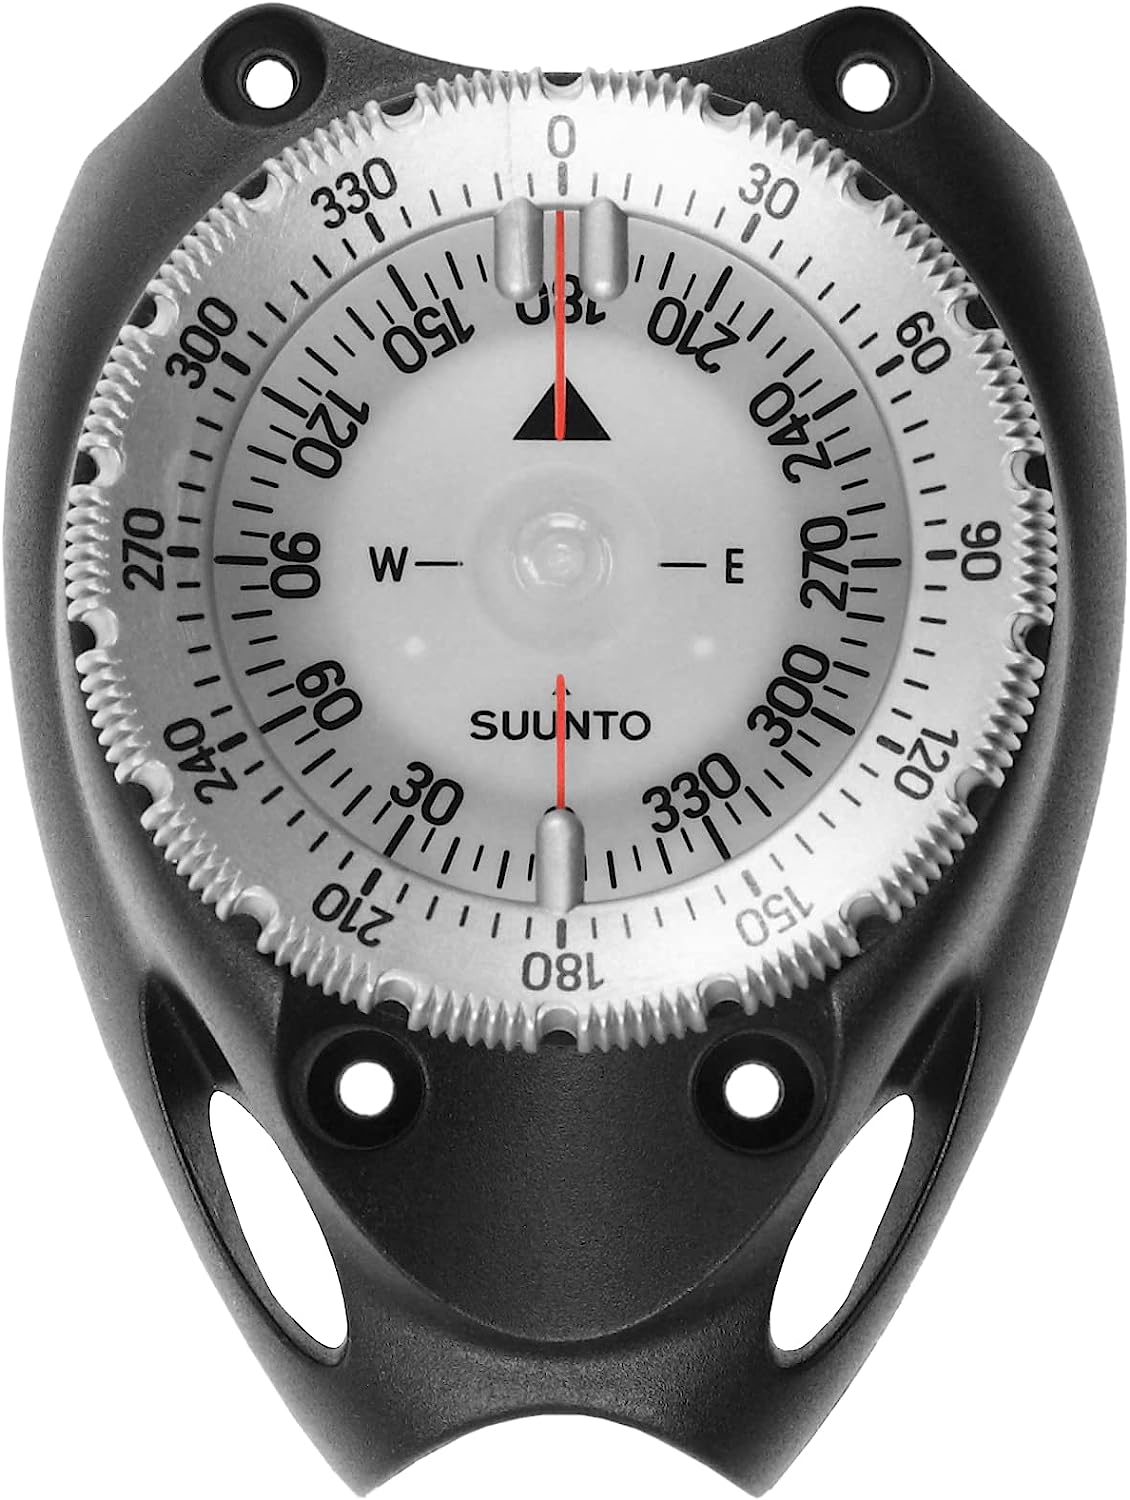 Suunto SK-8 Console Back Mount For Dive Compass